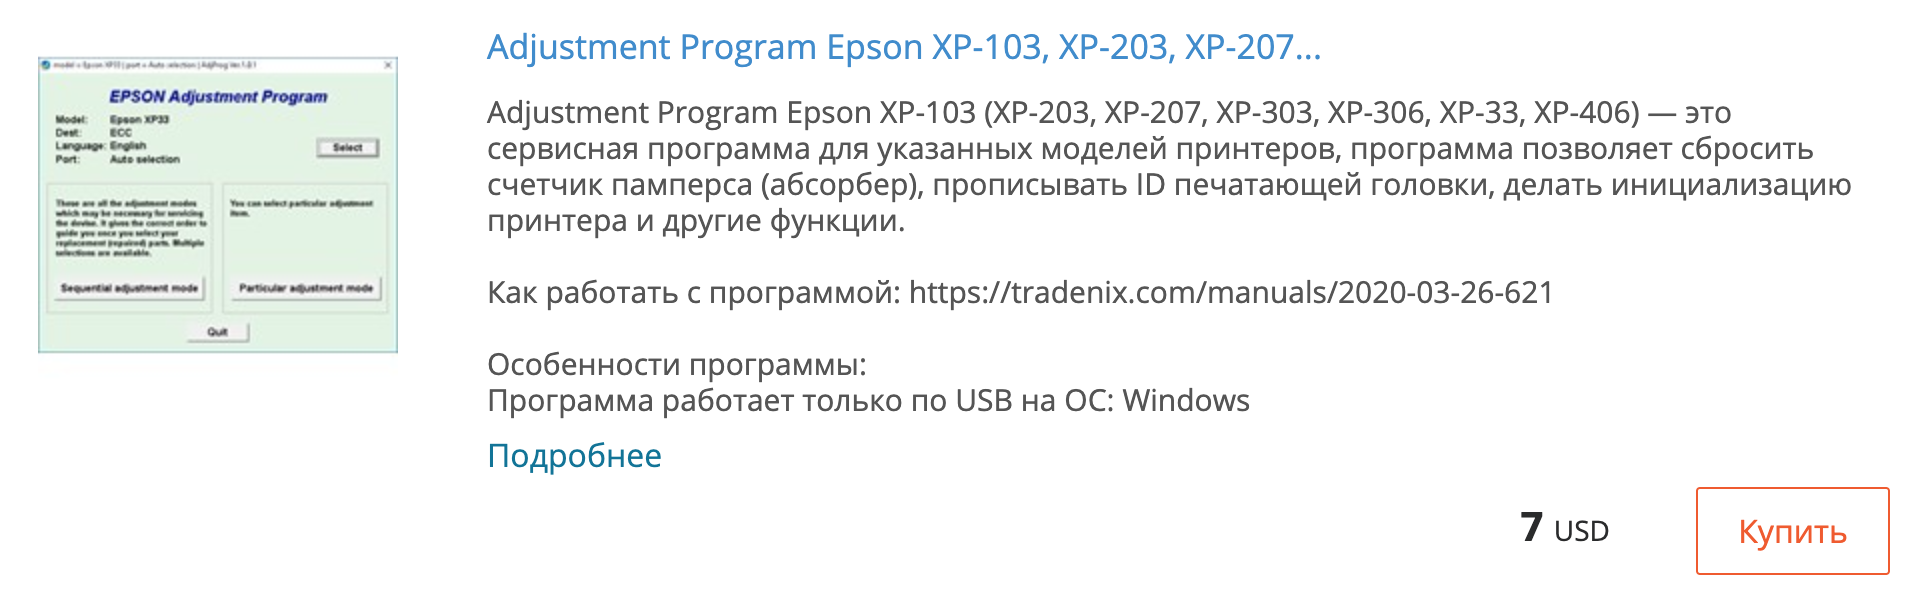 Купить Adjustment program Epson XP-103 (XP-203, XP-207, XP-303, XP-306, XP-33, XP-406)